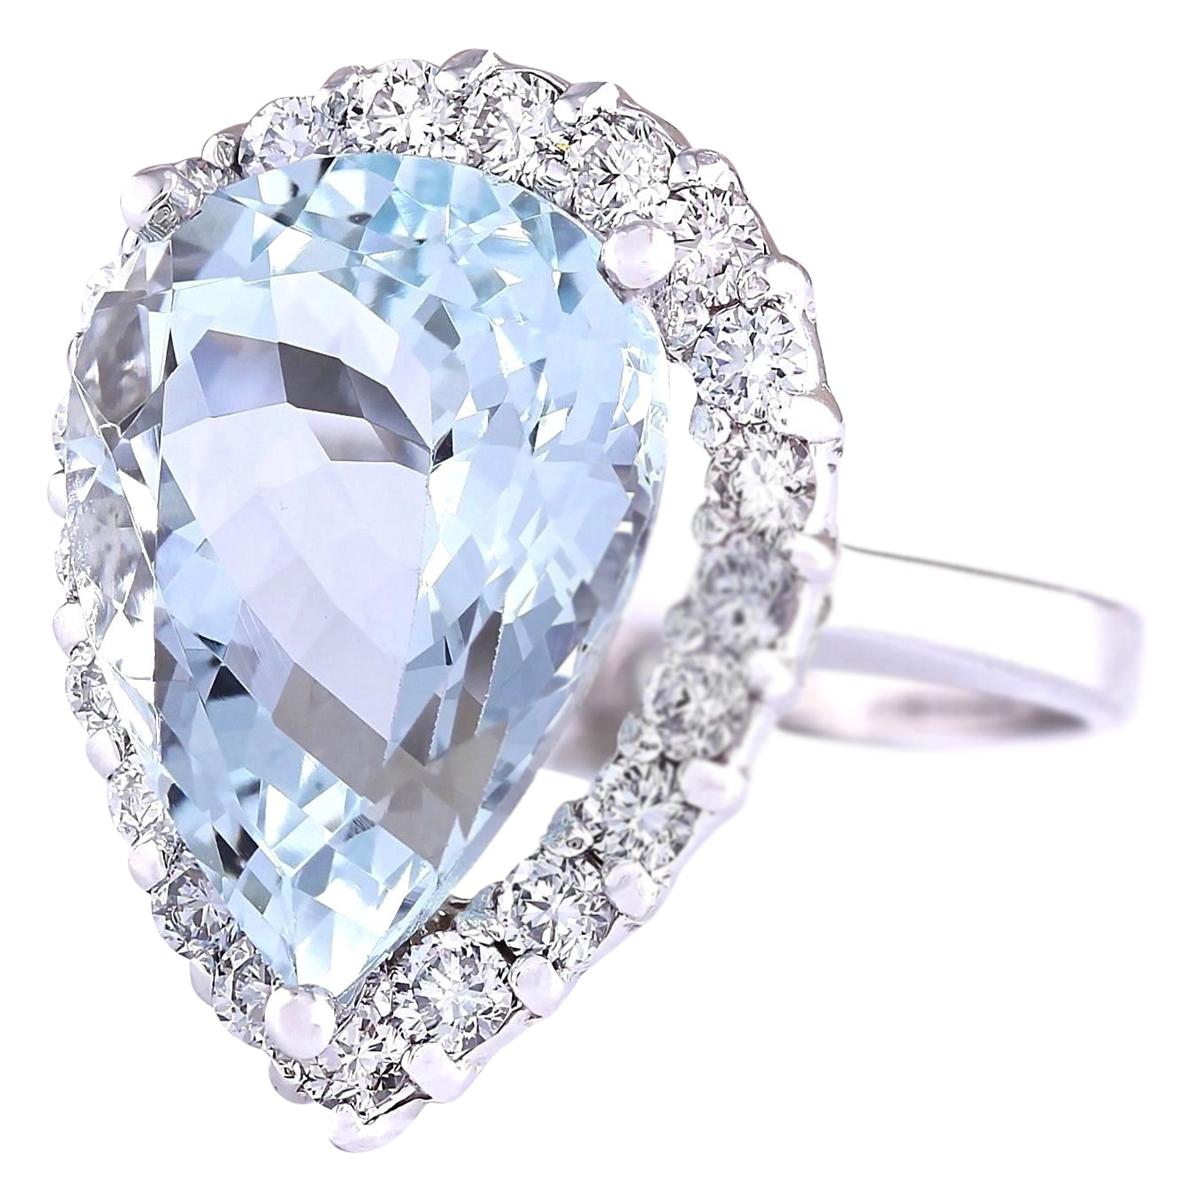 8.66 Carat Natural Aquamarine 14 Karat White Gold Diamond Ring
Stamped: 14K White Gold
Total Ring Weight: 5.9 Grams
Total Natural Aquamarine Weight is 7.66 Carat (Measures: 17.00x12.00 mm)
Color: Blue
Total Natural Diamond Weight is 1.00